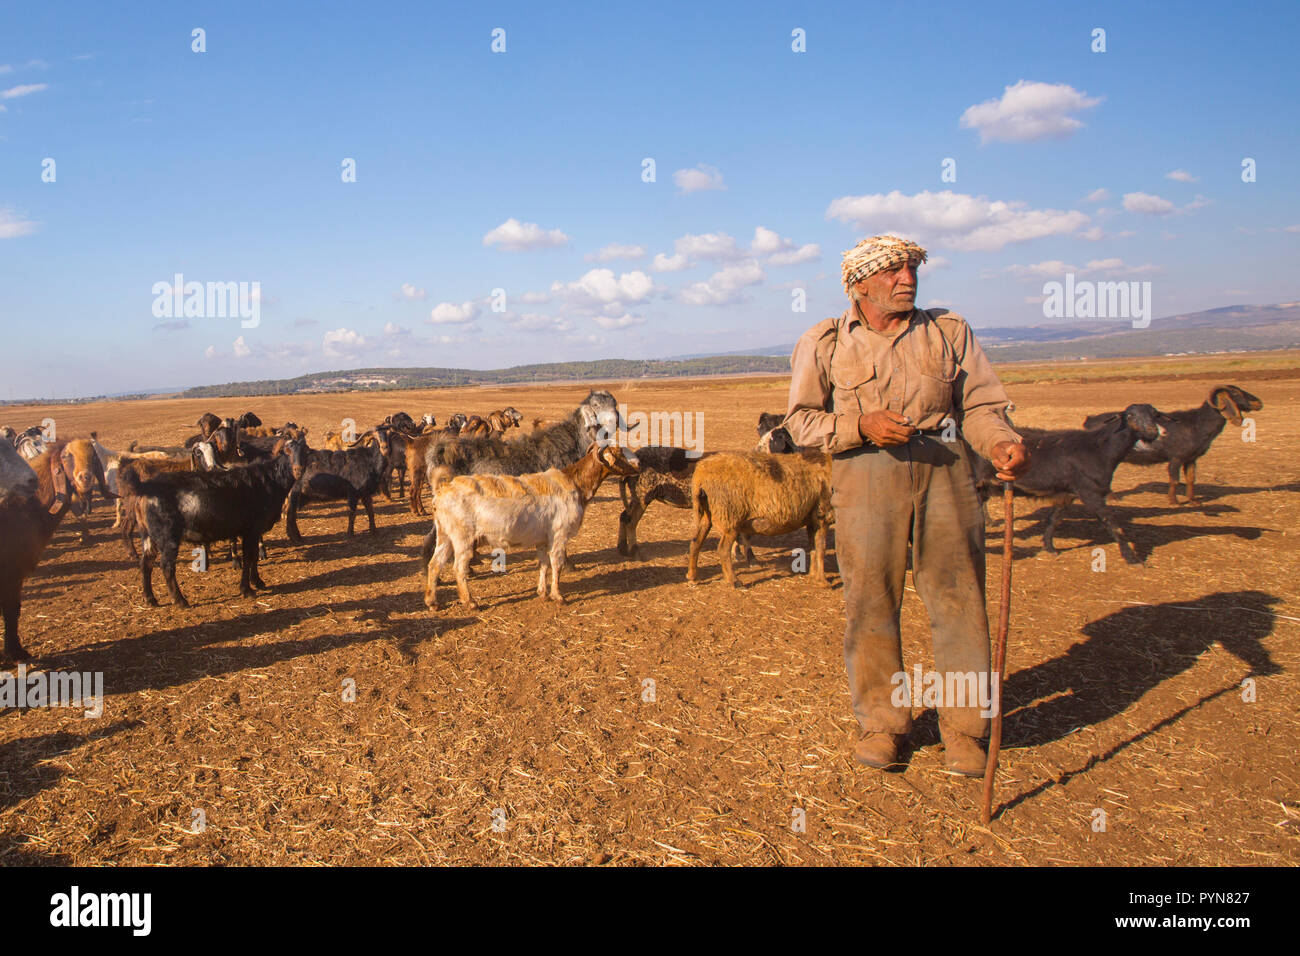 Mature Bedouin shepherd with his herd of sheep. Photographed in the Negev Desert, Israel Stock Photo